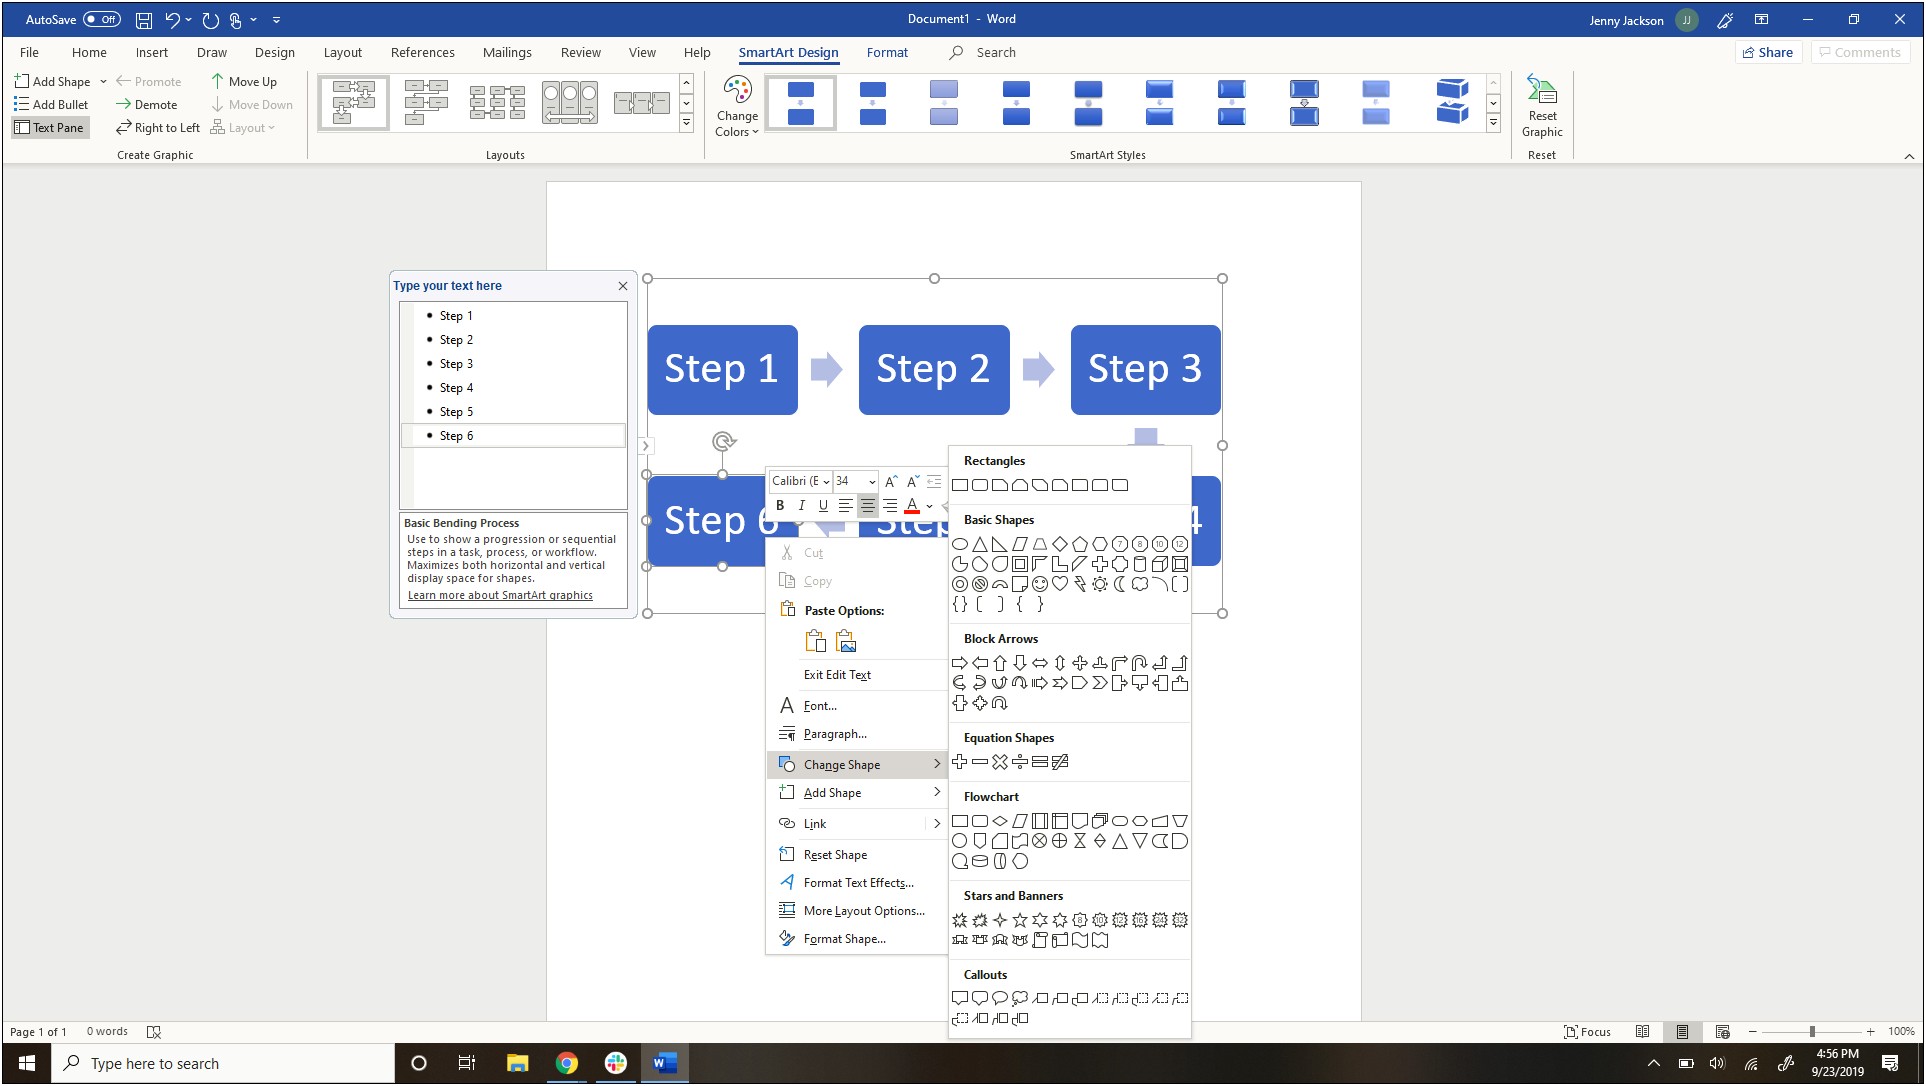 Microsoft Office Word 2010 Flowchart Template